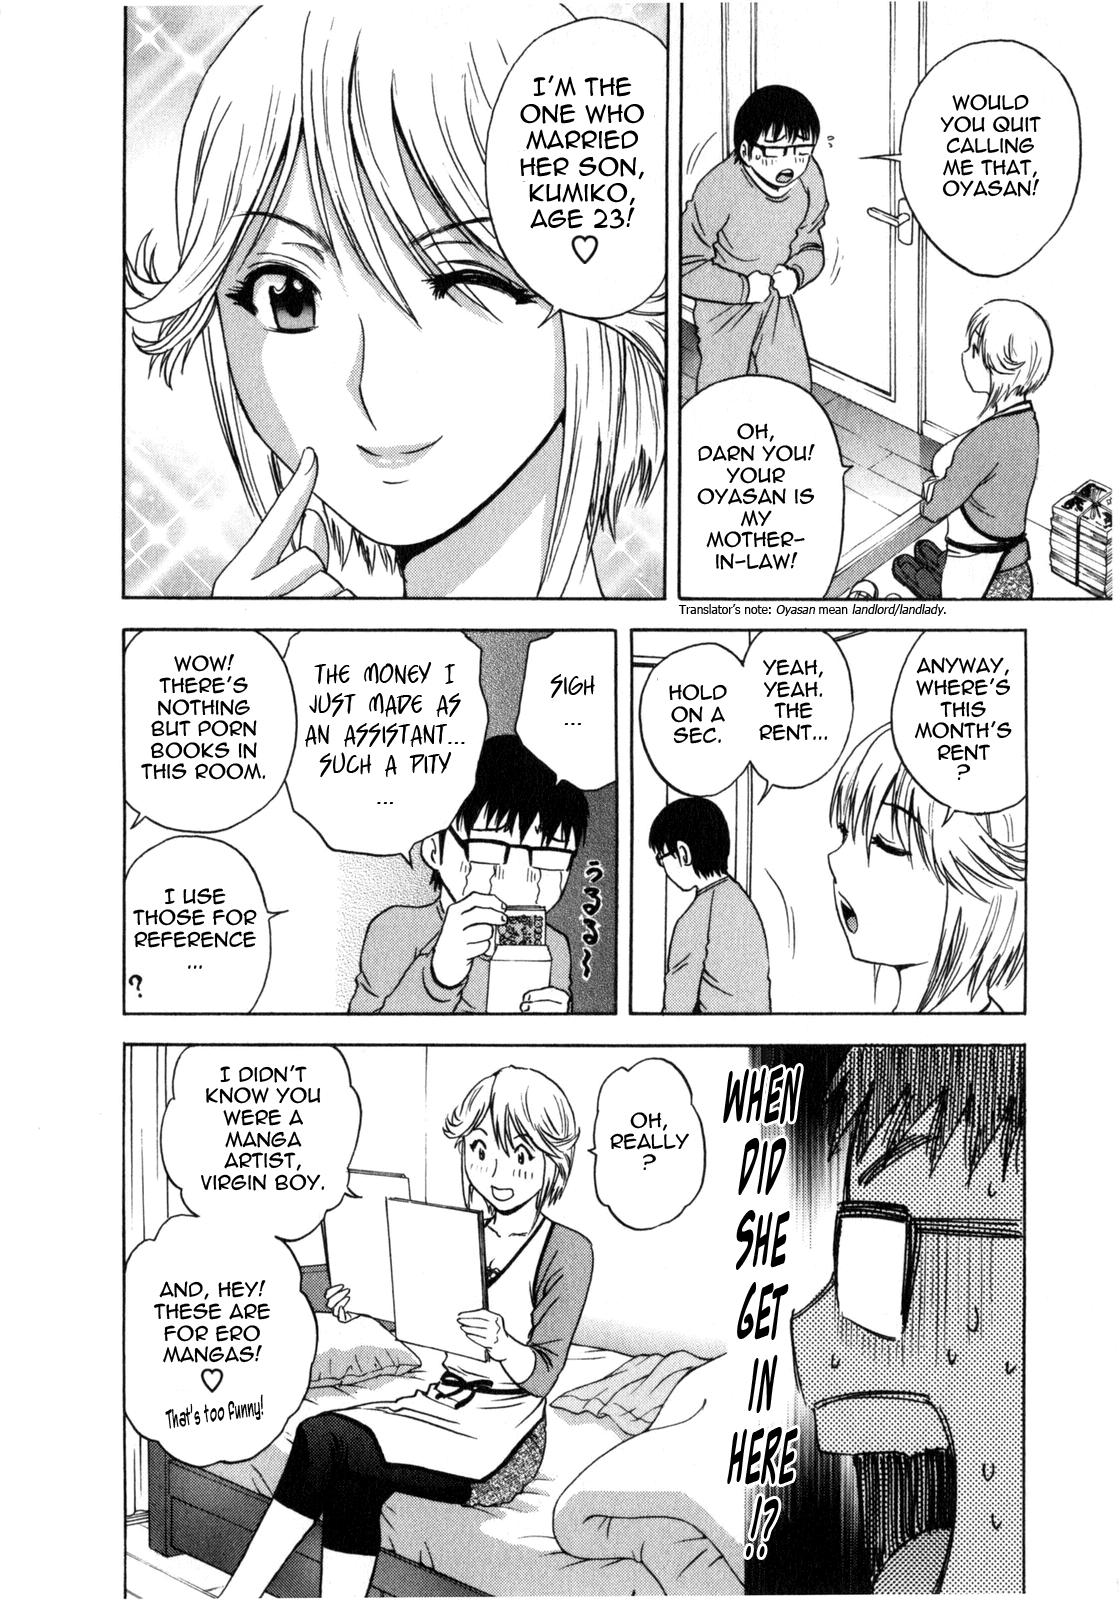 [Hidemaru] Life with Married Women Just Like a Manga 1 - Ch. 1-4 [English] {Tadanohito} 29